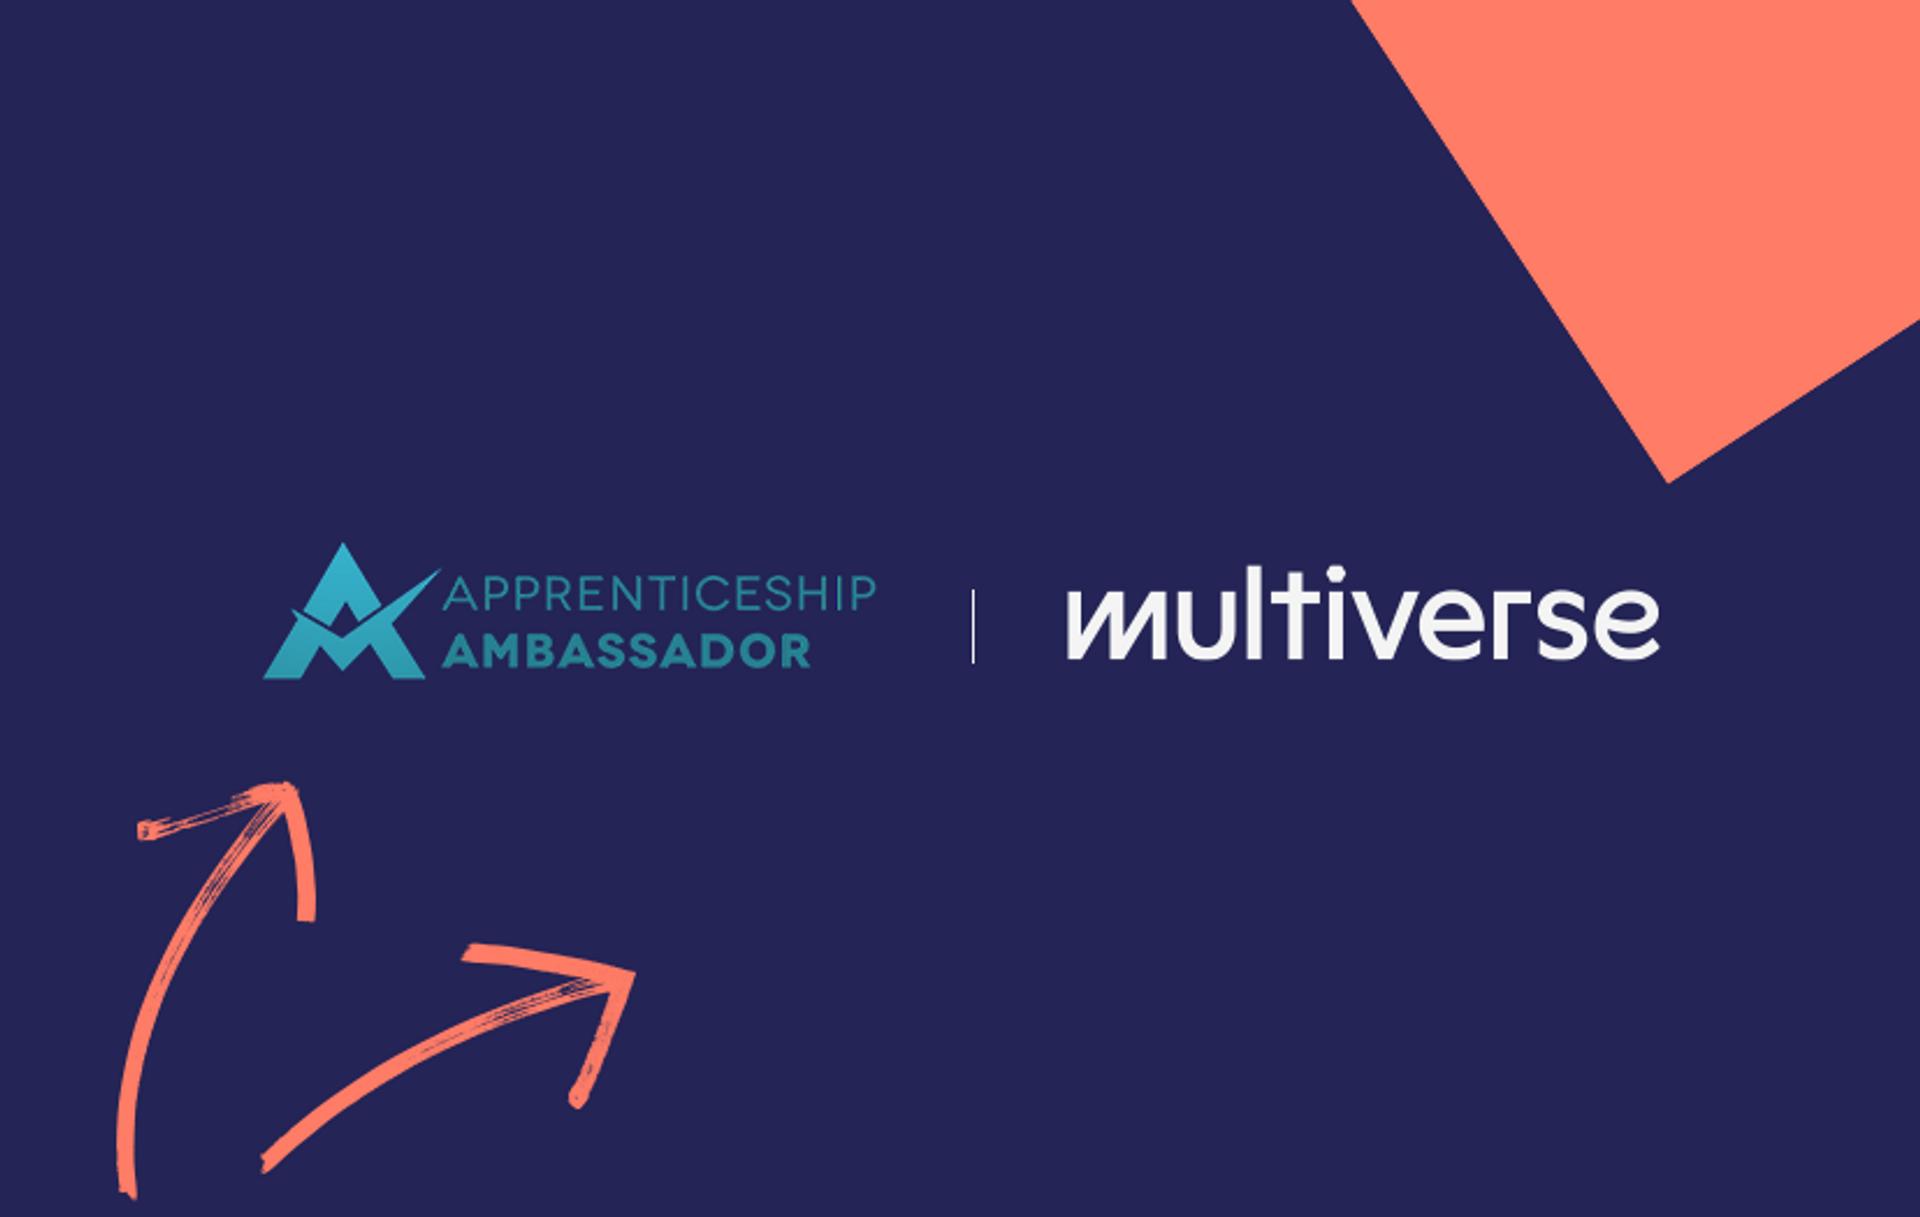 Apprenticeship Ambassador logo and Multiverse logo side by side